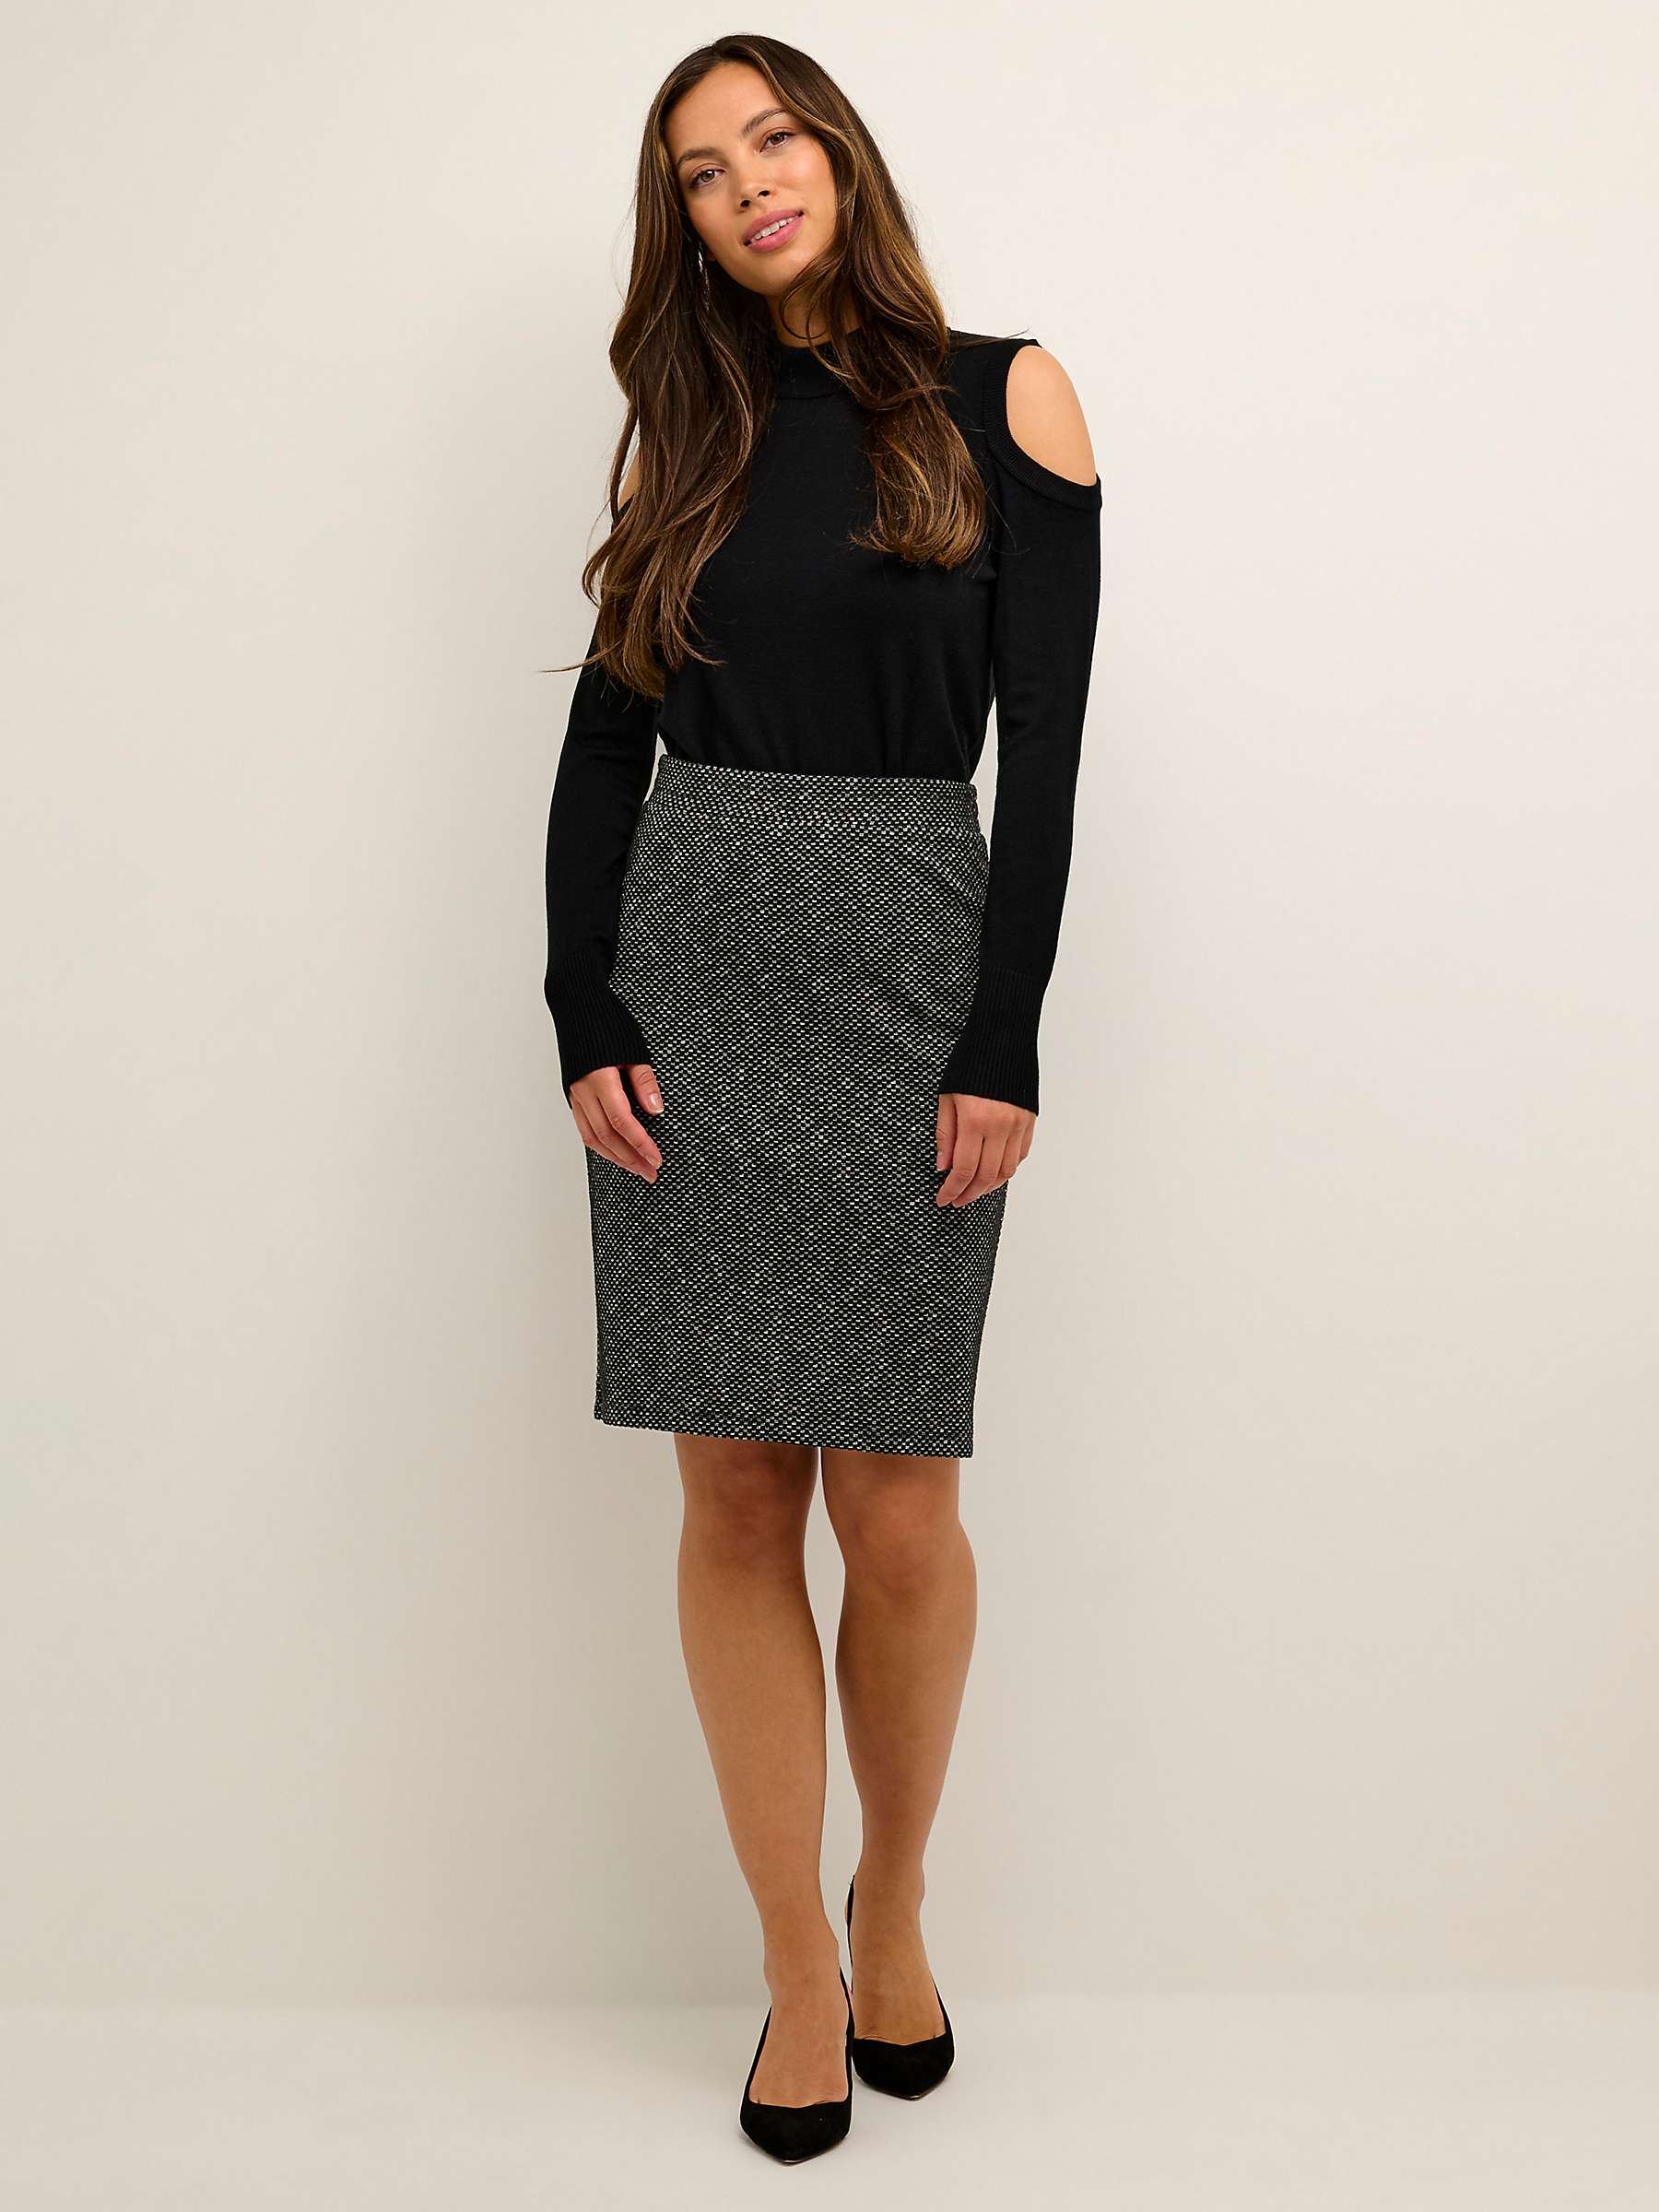 Buy KAFFE Tippie Above Knee Length Pencil Skirt, Black/Chalk Online at johnlewis.com